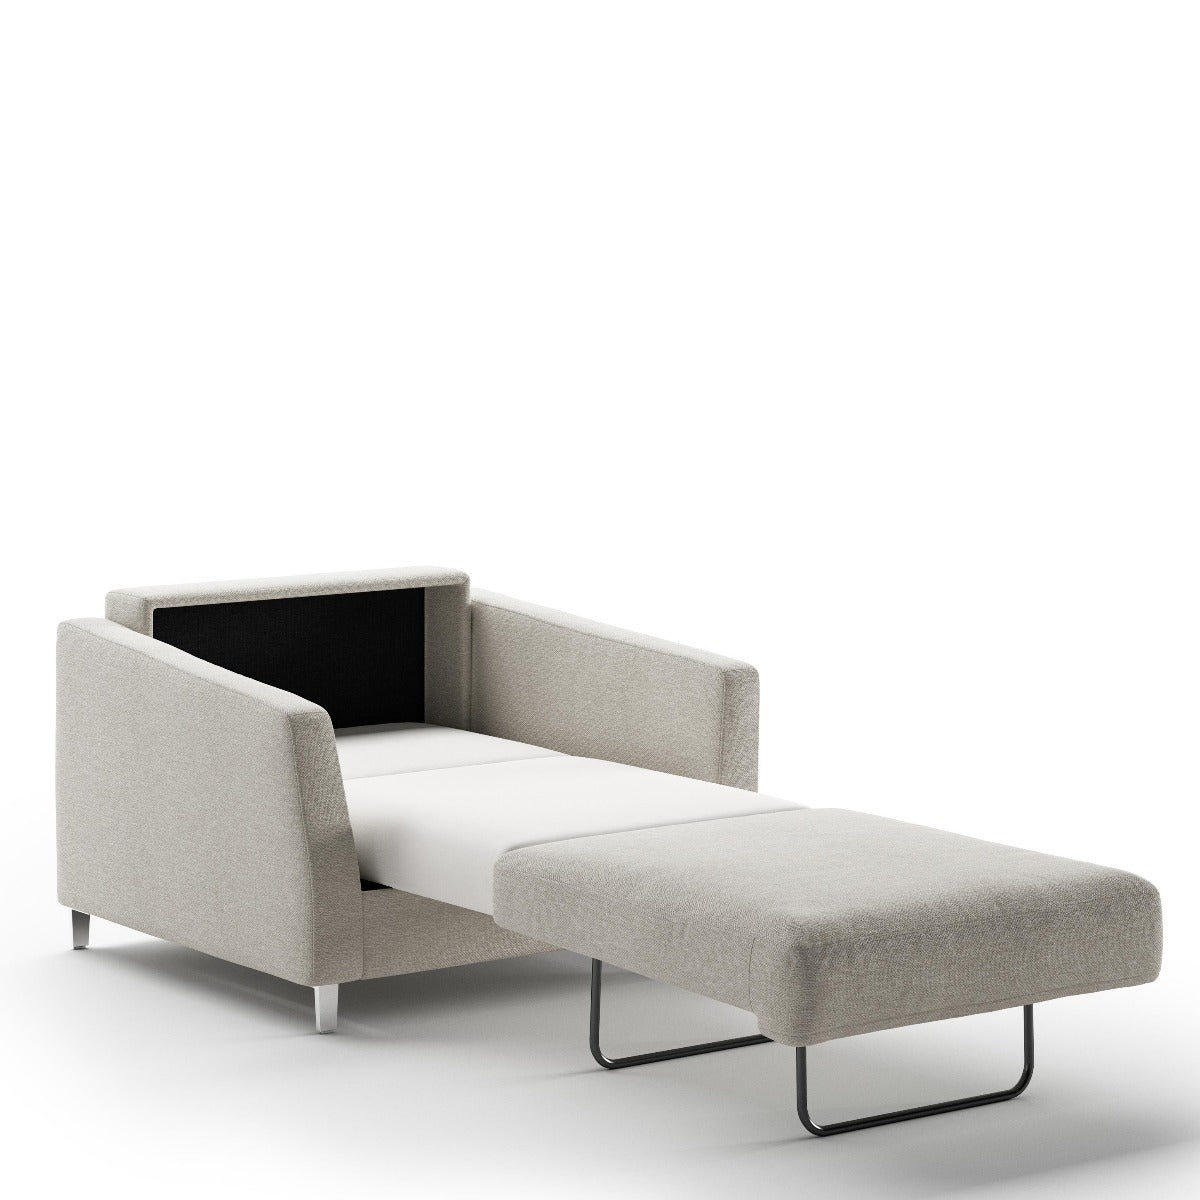 Luonto Furniture Monika Cot Chair Sleeper - Fun 496 -234/9 Chrome